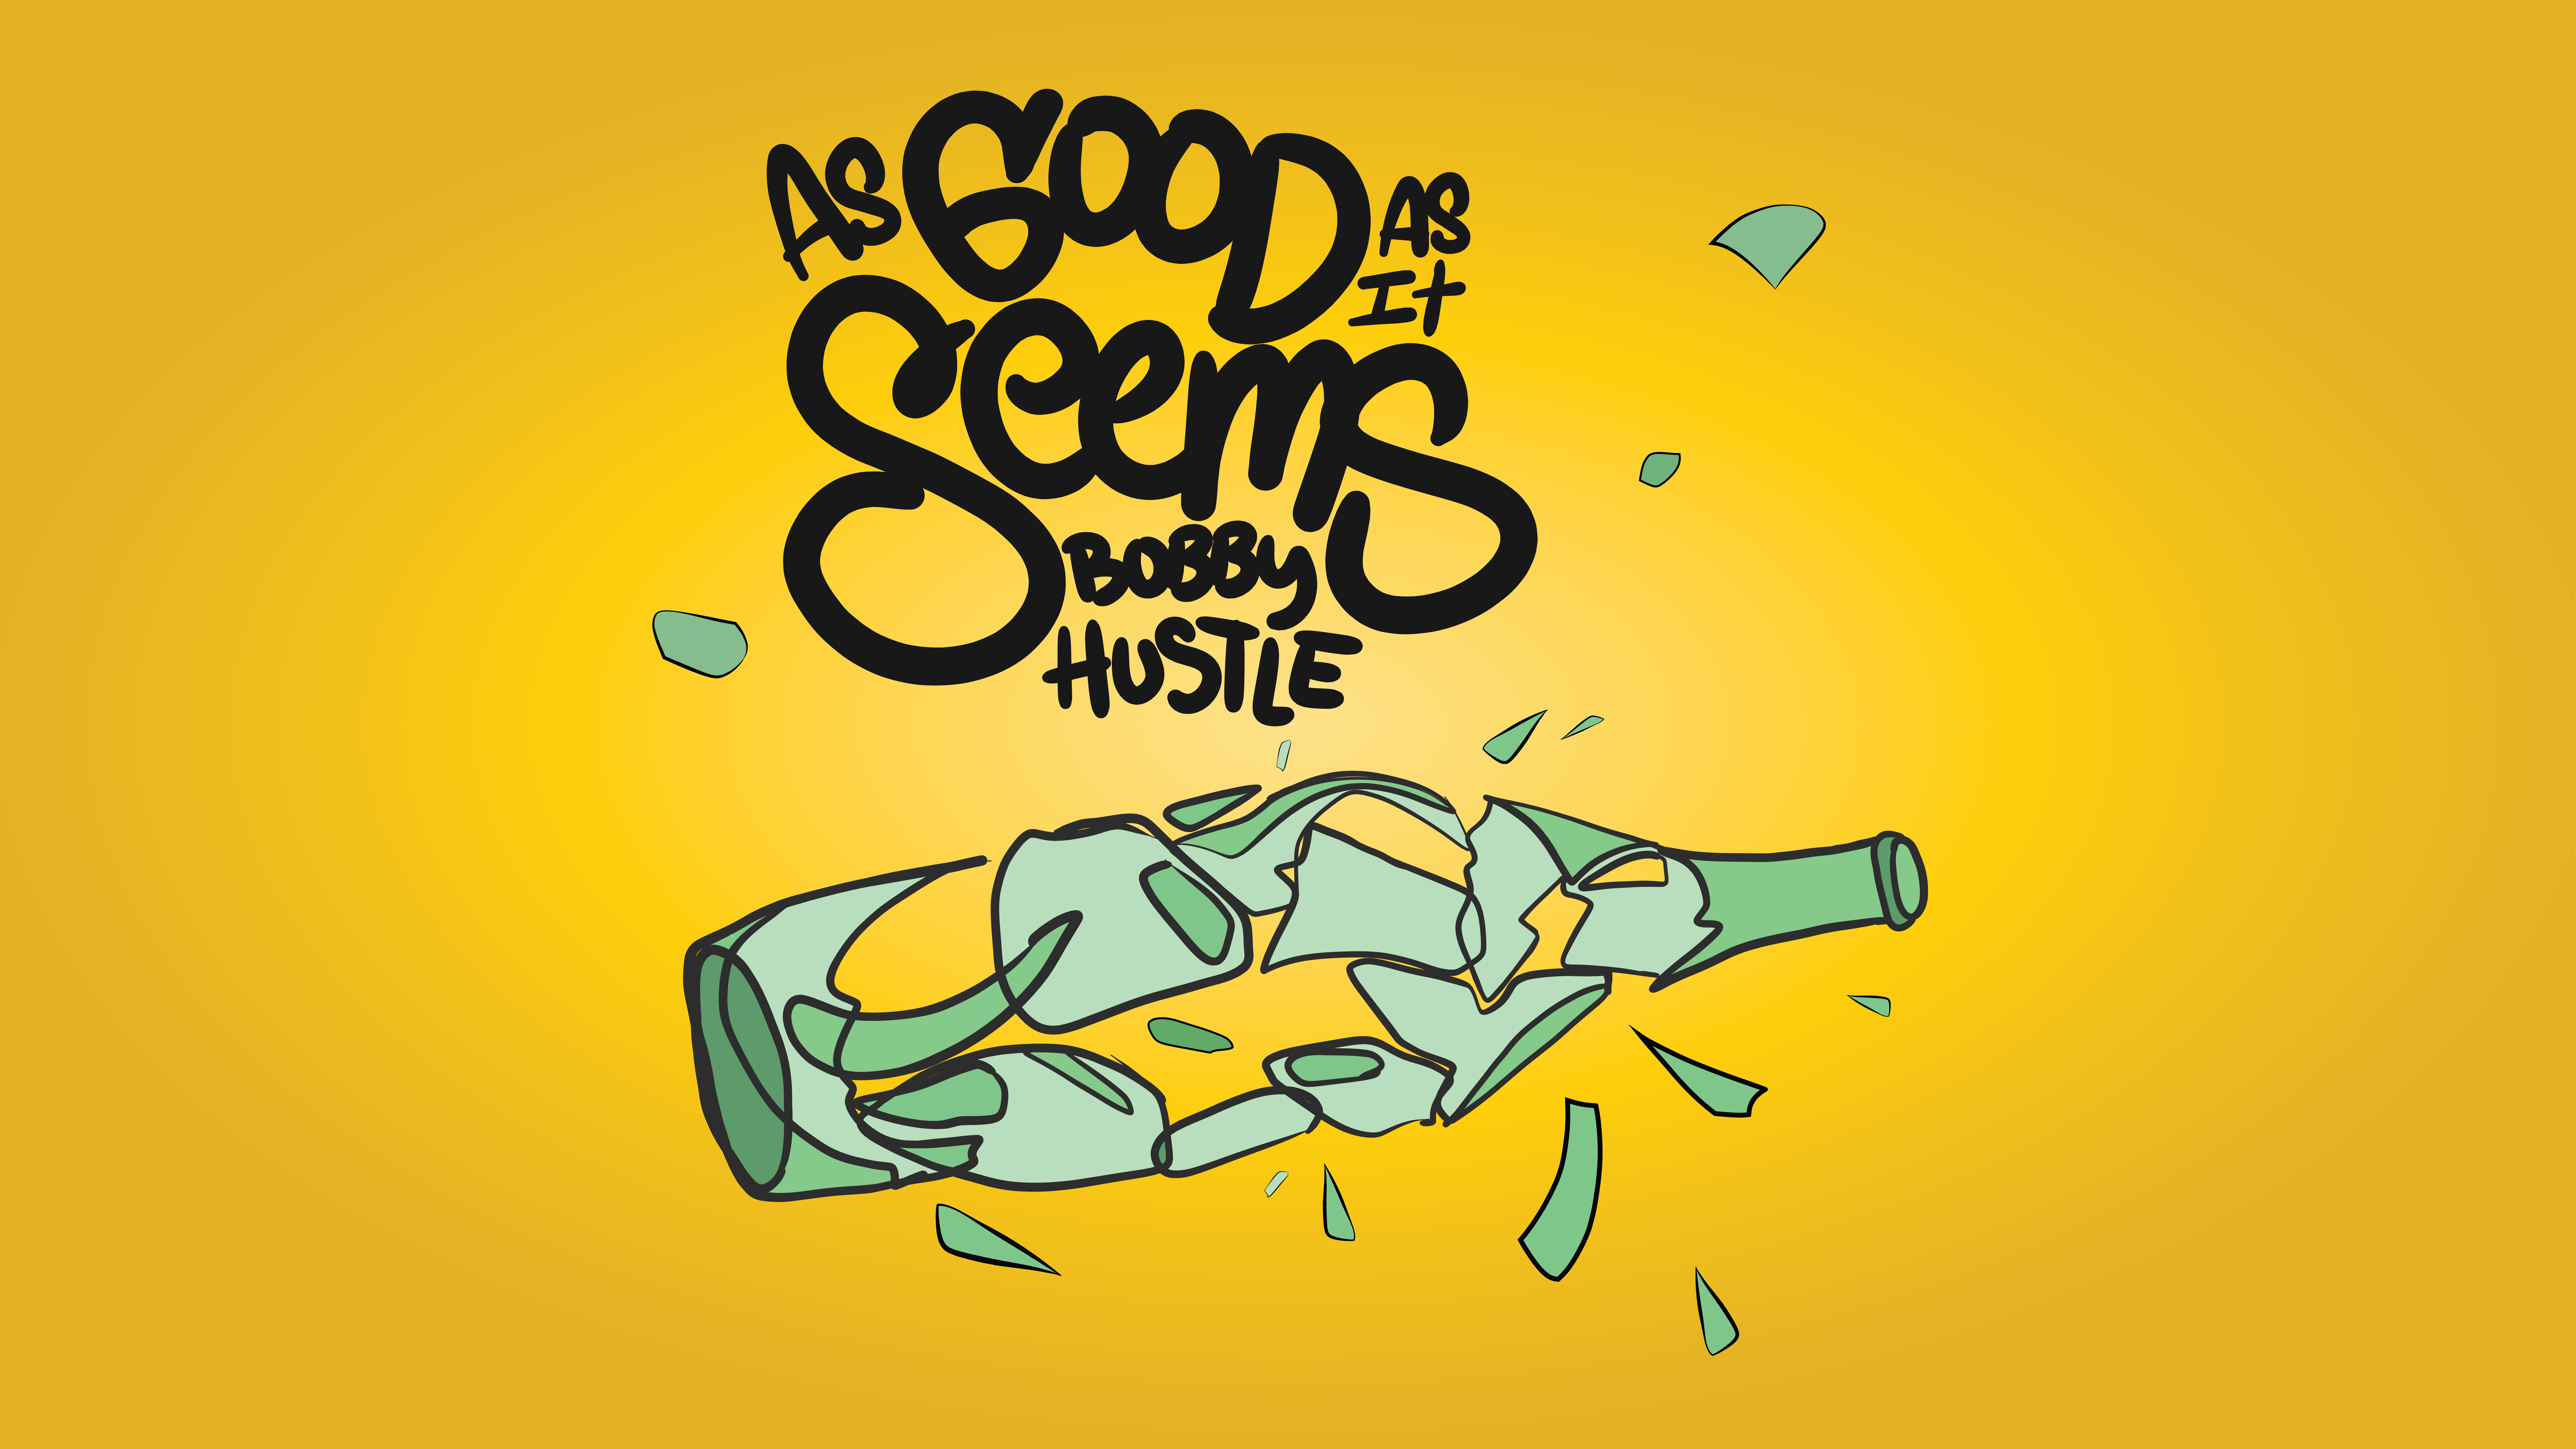 Bobby Hustle – “As Good As It Seems” (OLV)